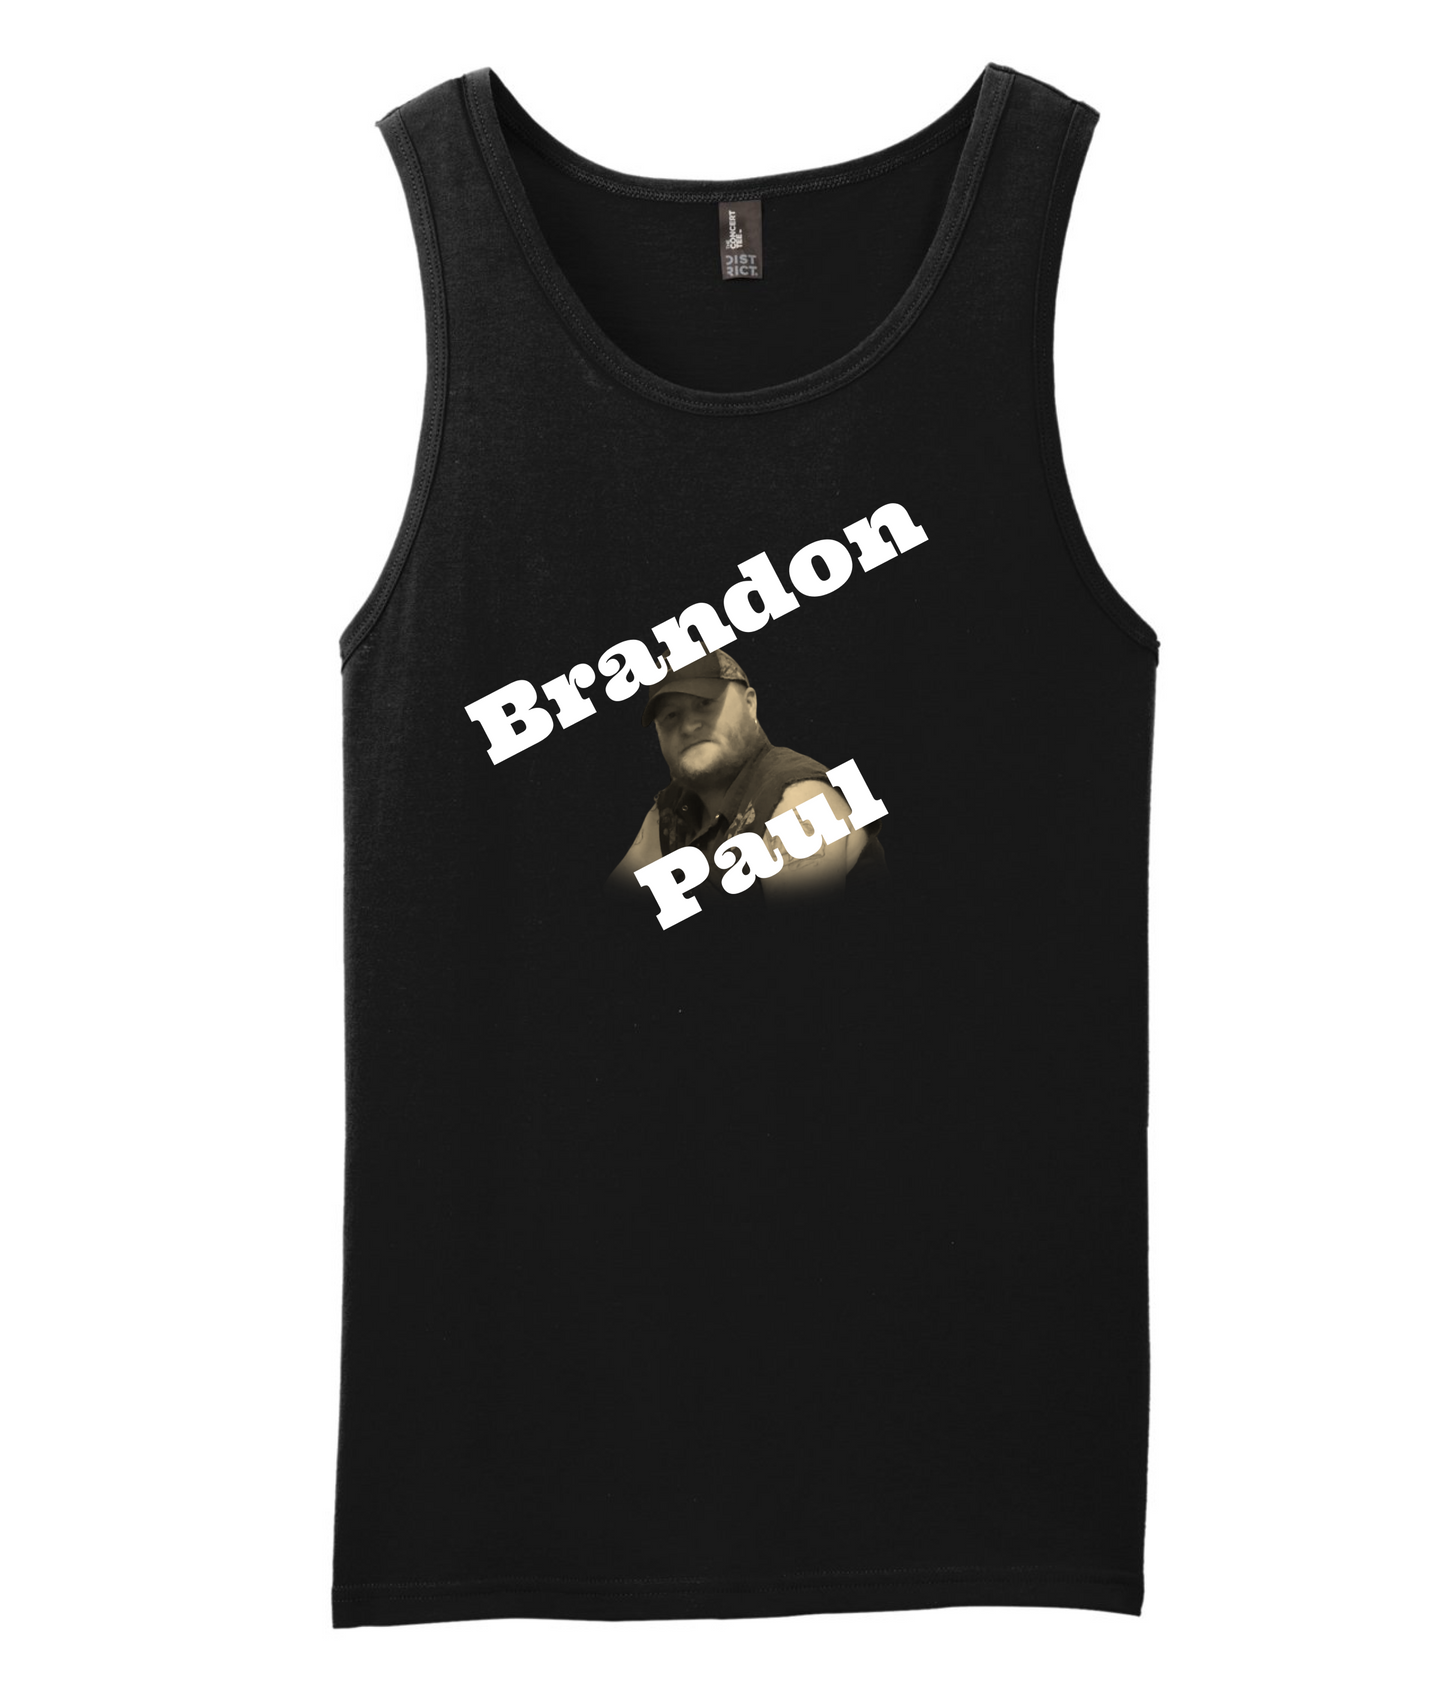 Brandon Paul - Logo - Black Tank Top